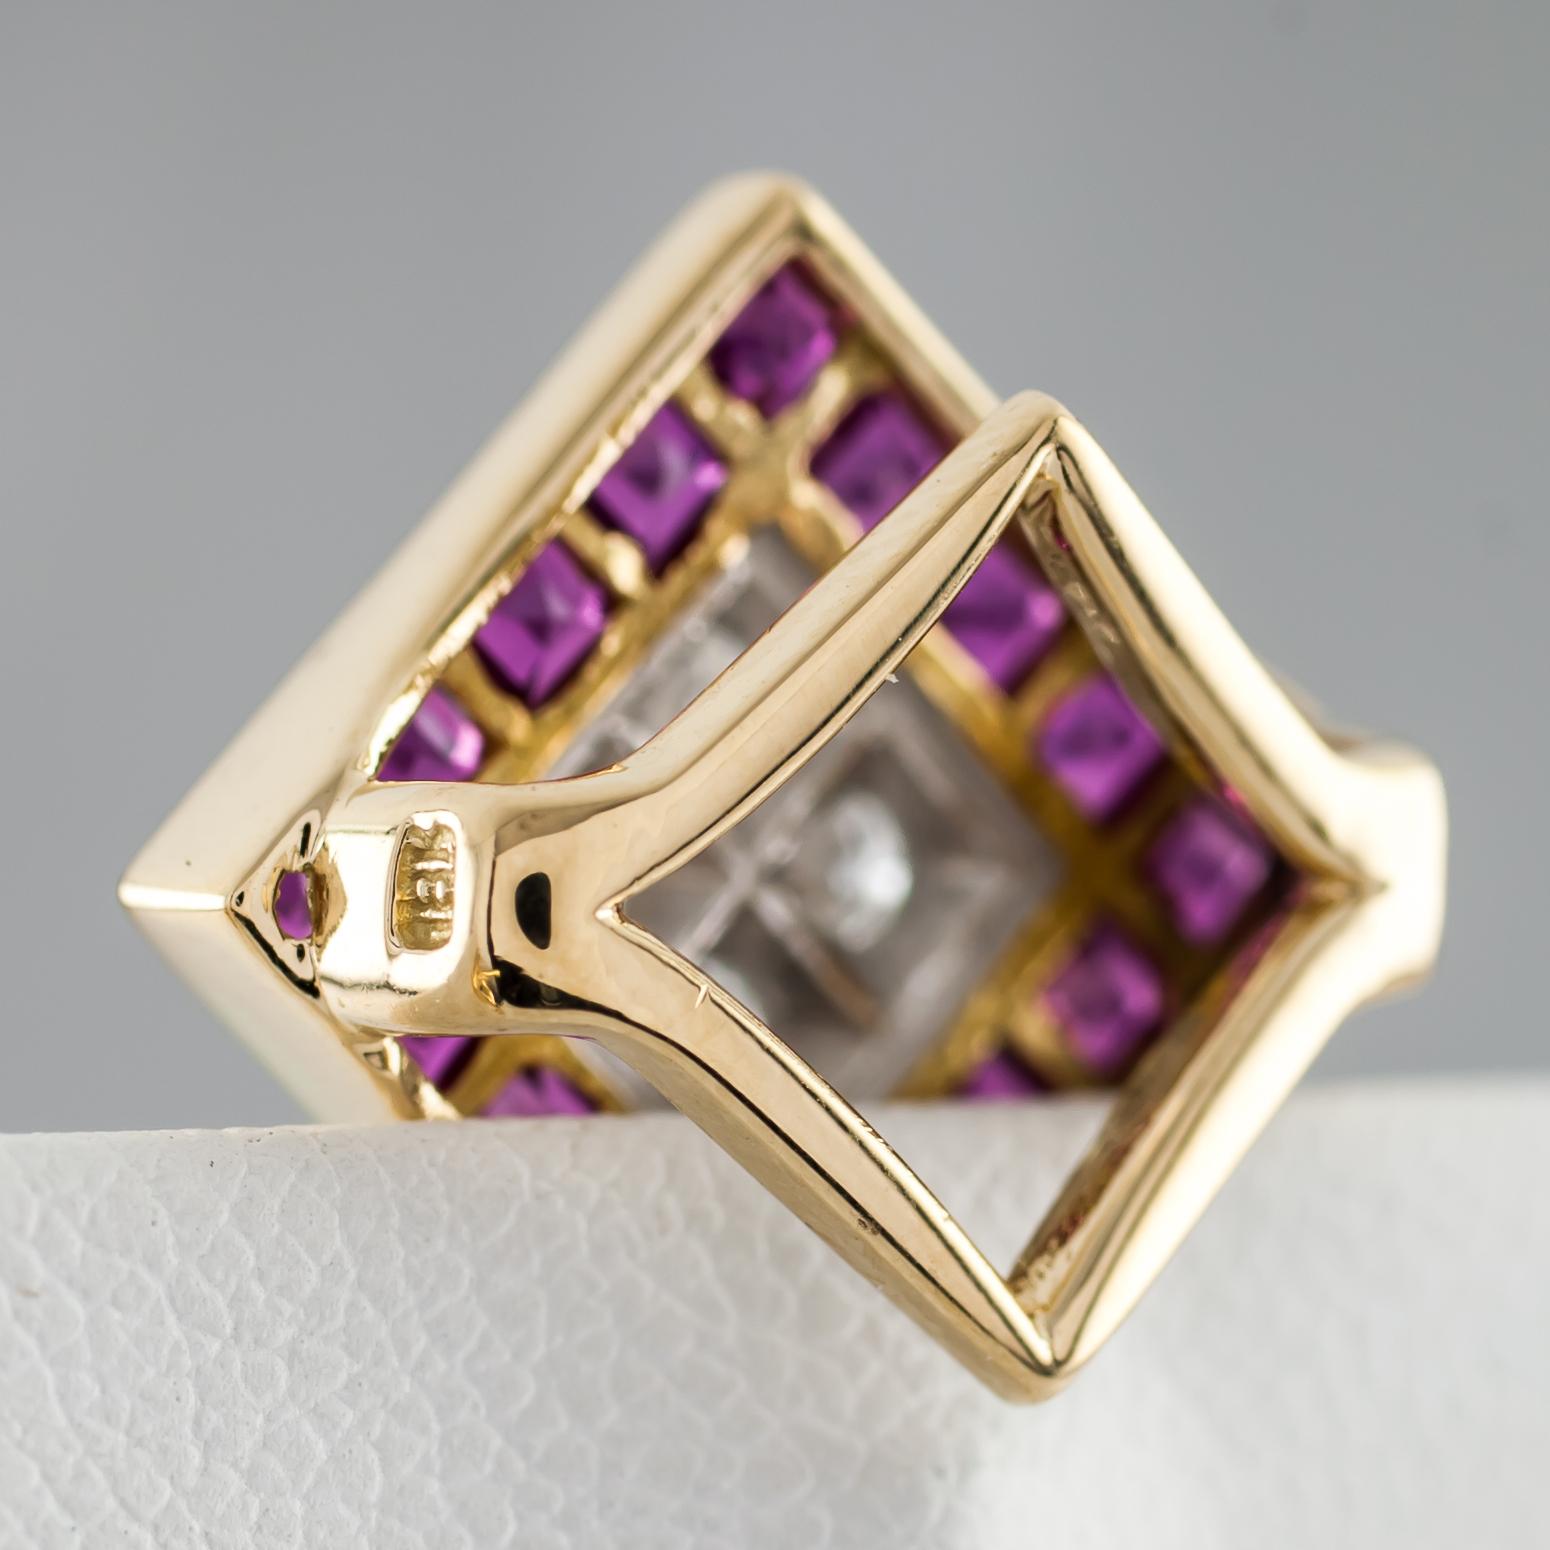 Princess Cut 5.75 carat Ruby & 1.35 carat Diamond 18k Yellow Gold Earring and Pendant Set For Sale